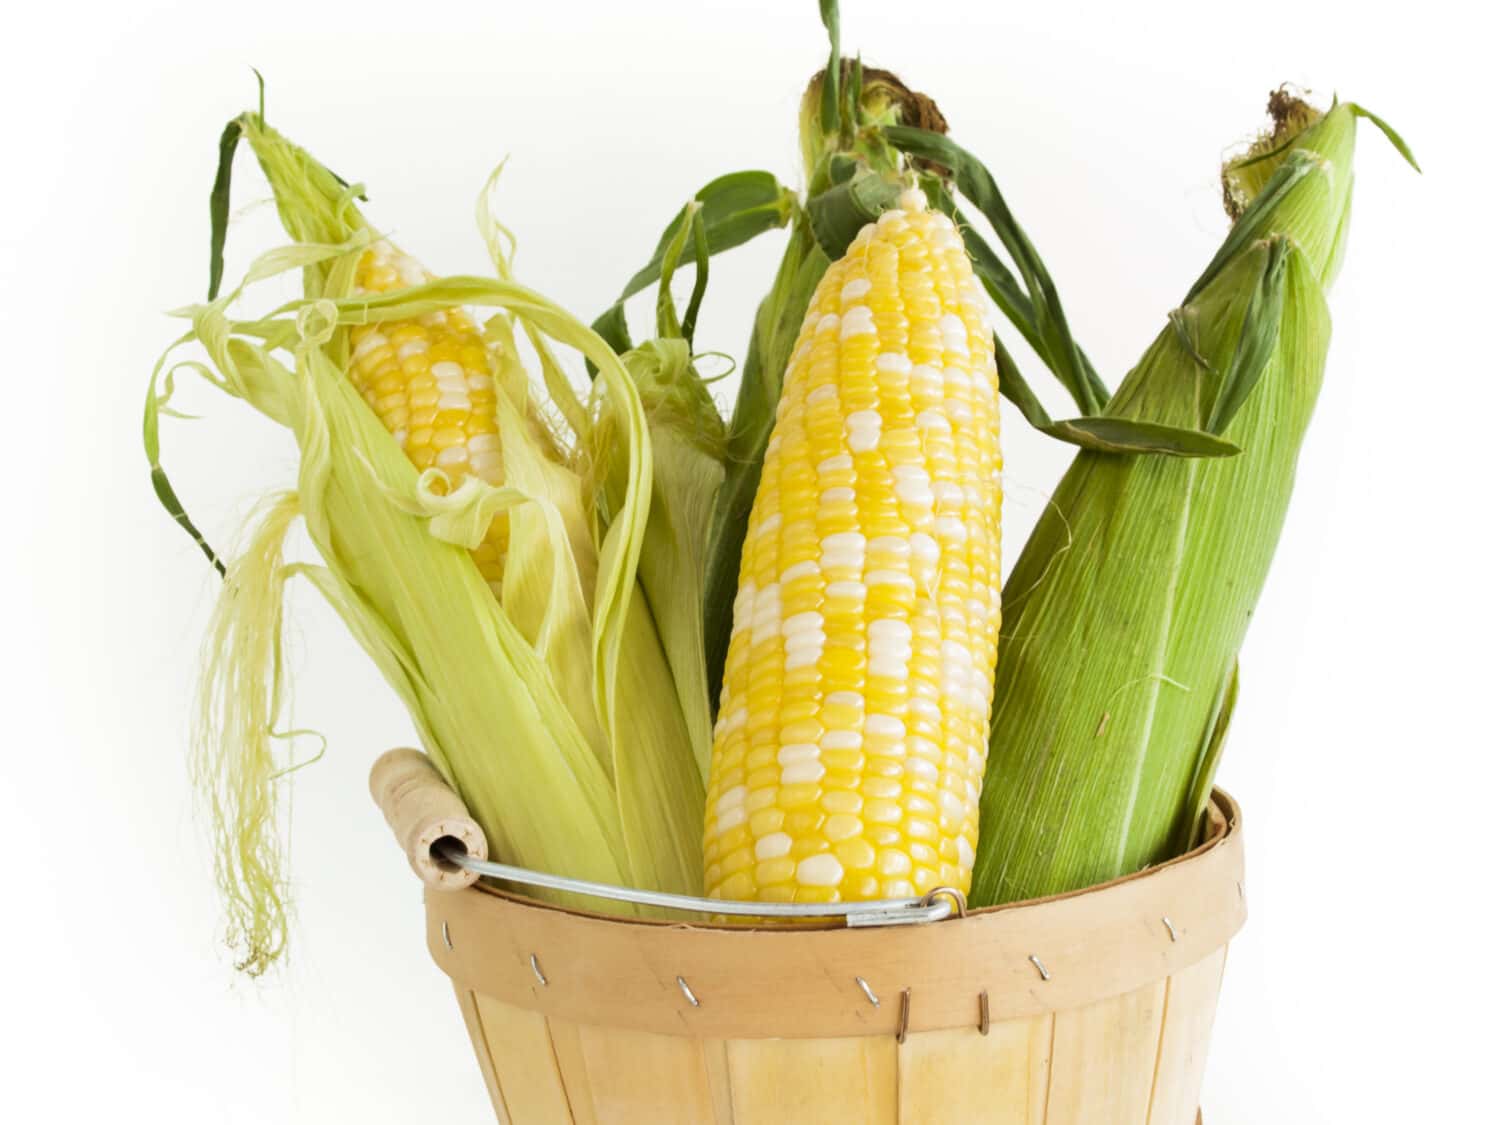 Olathe sweet corn in basket on white background.